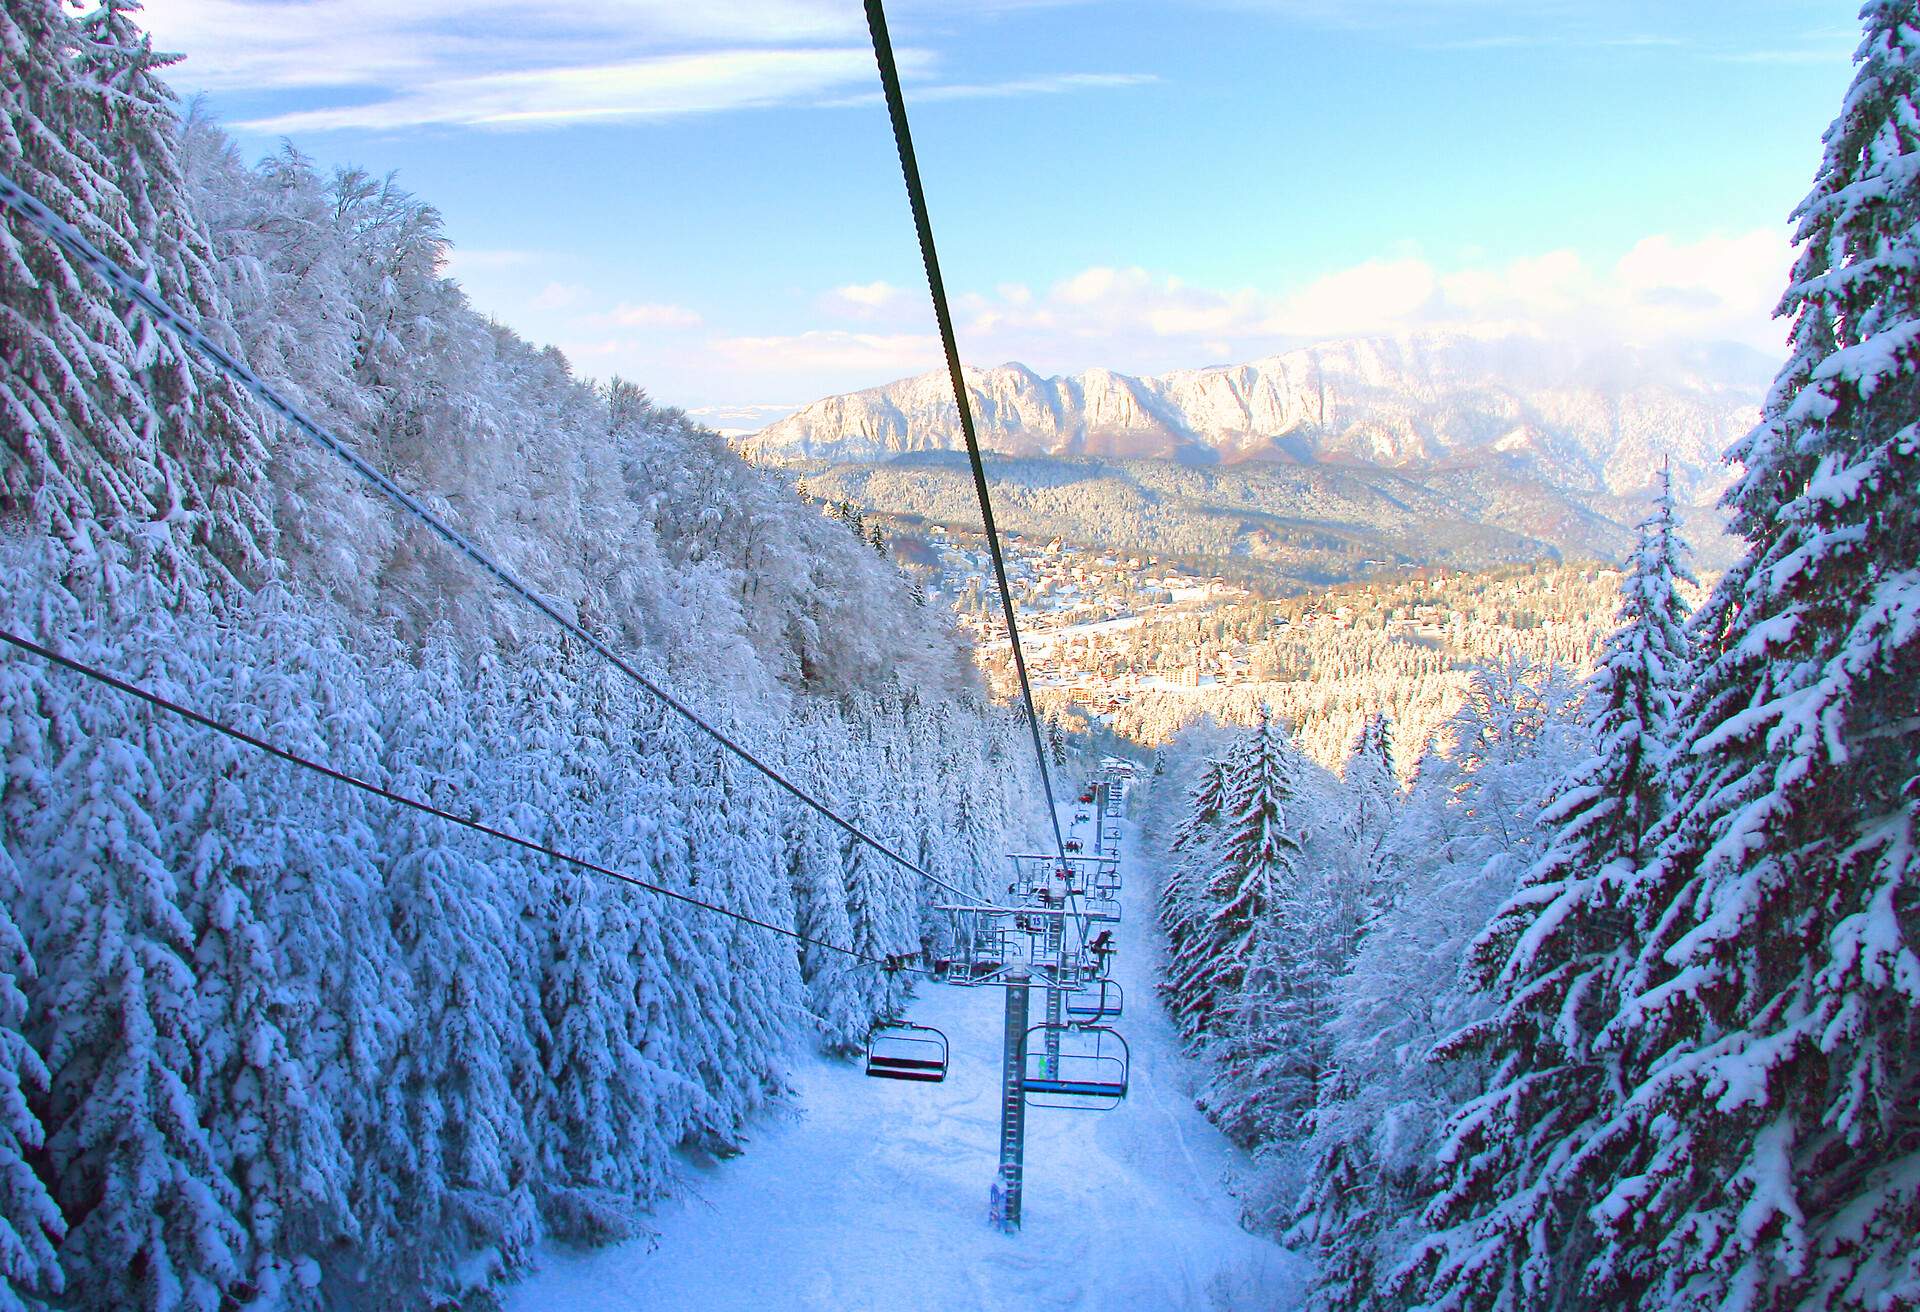 DEST_CANADA_WHISTLER_Ski Resort in winter-GettyImages-638173594